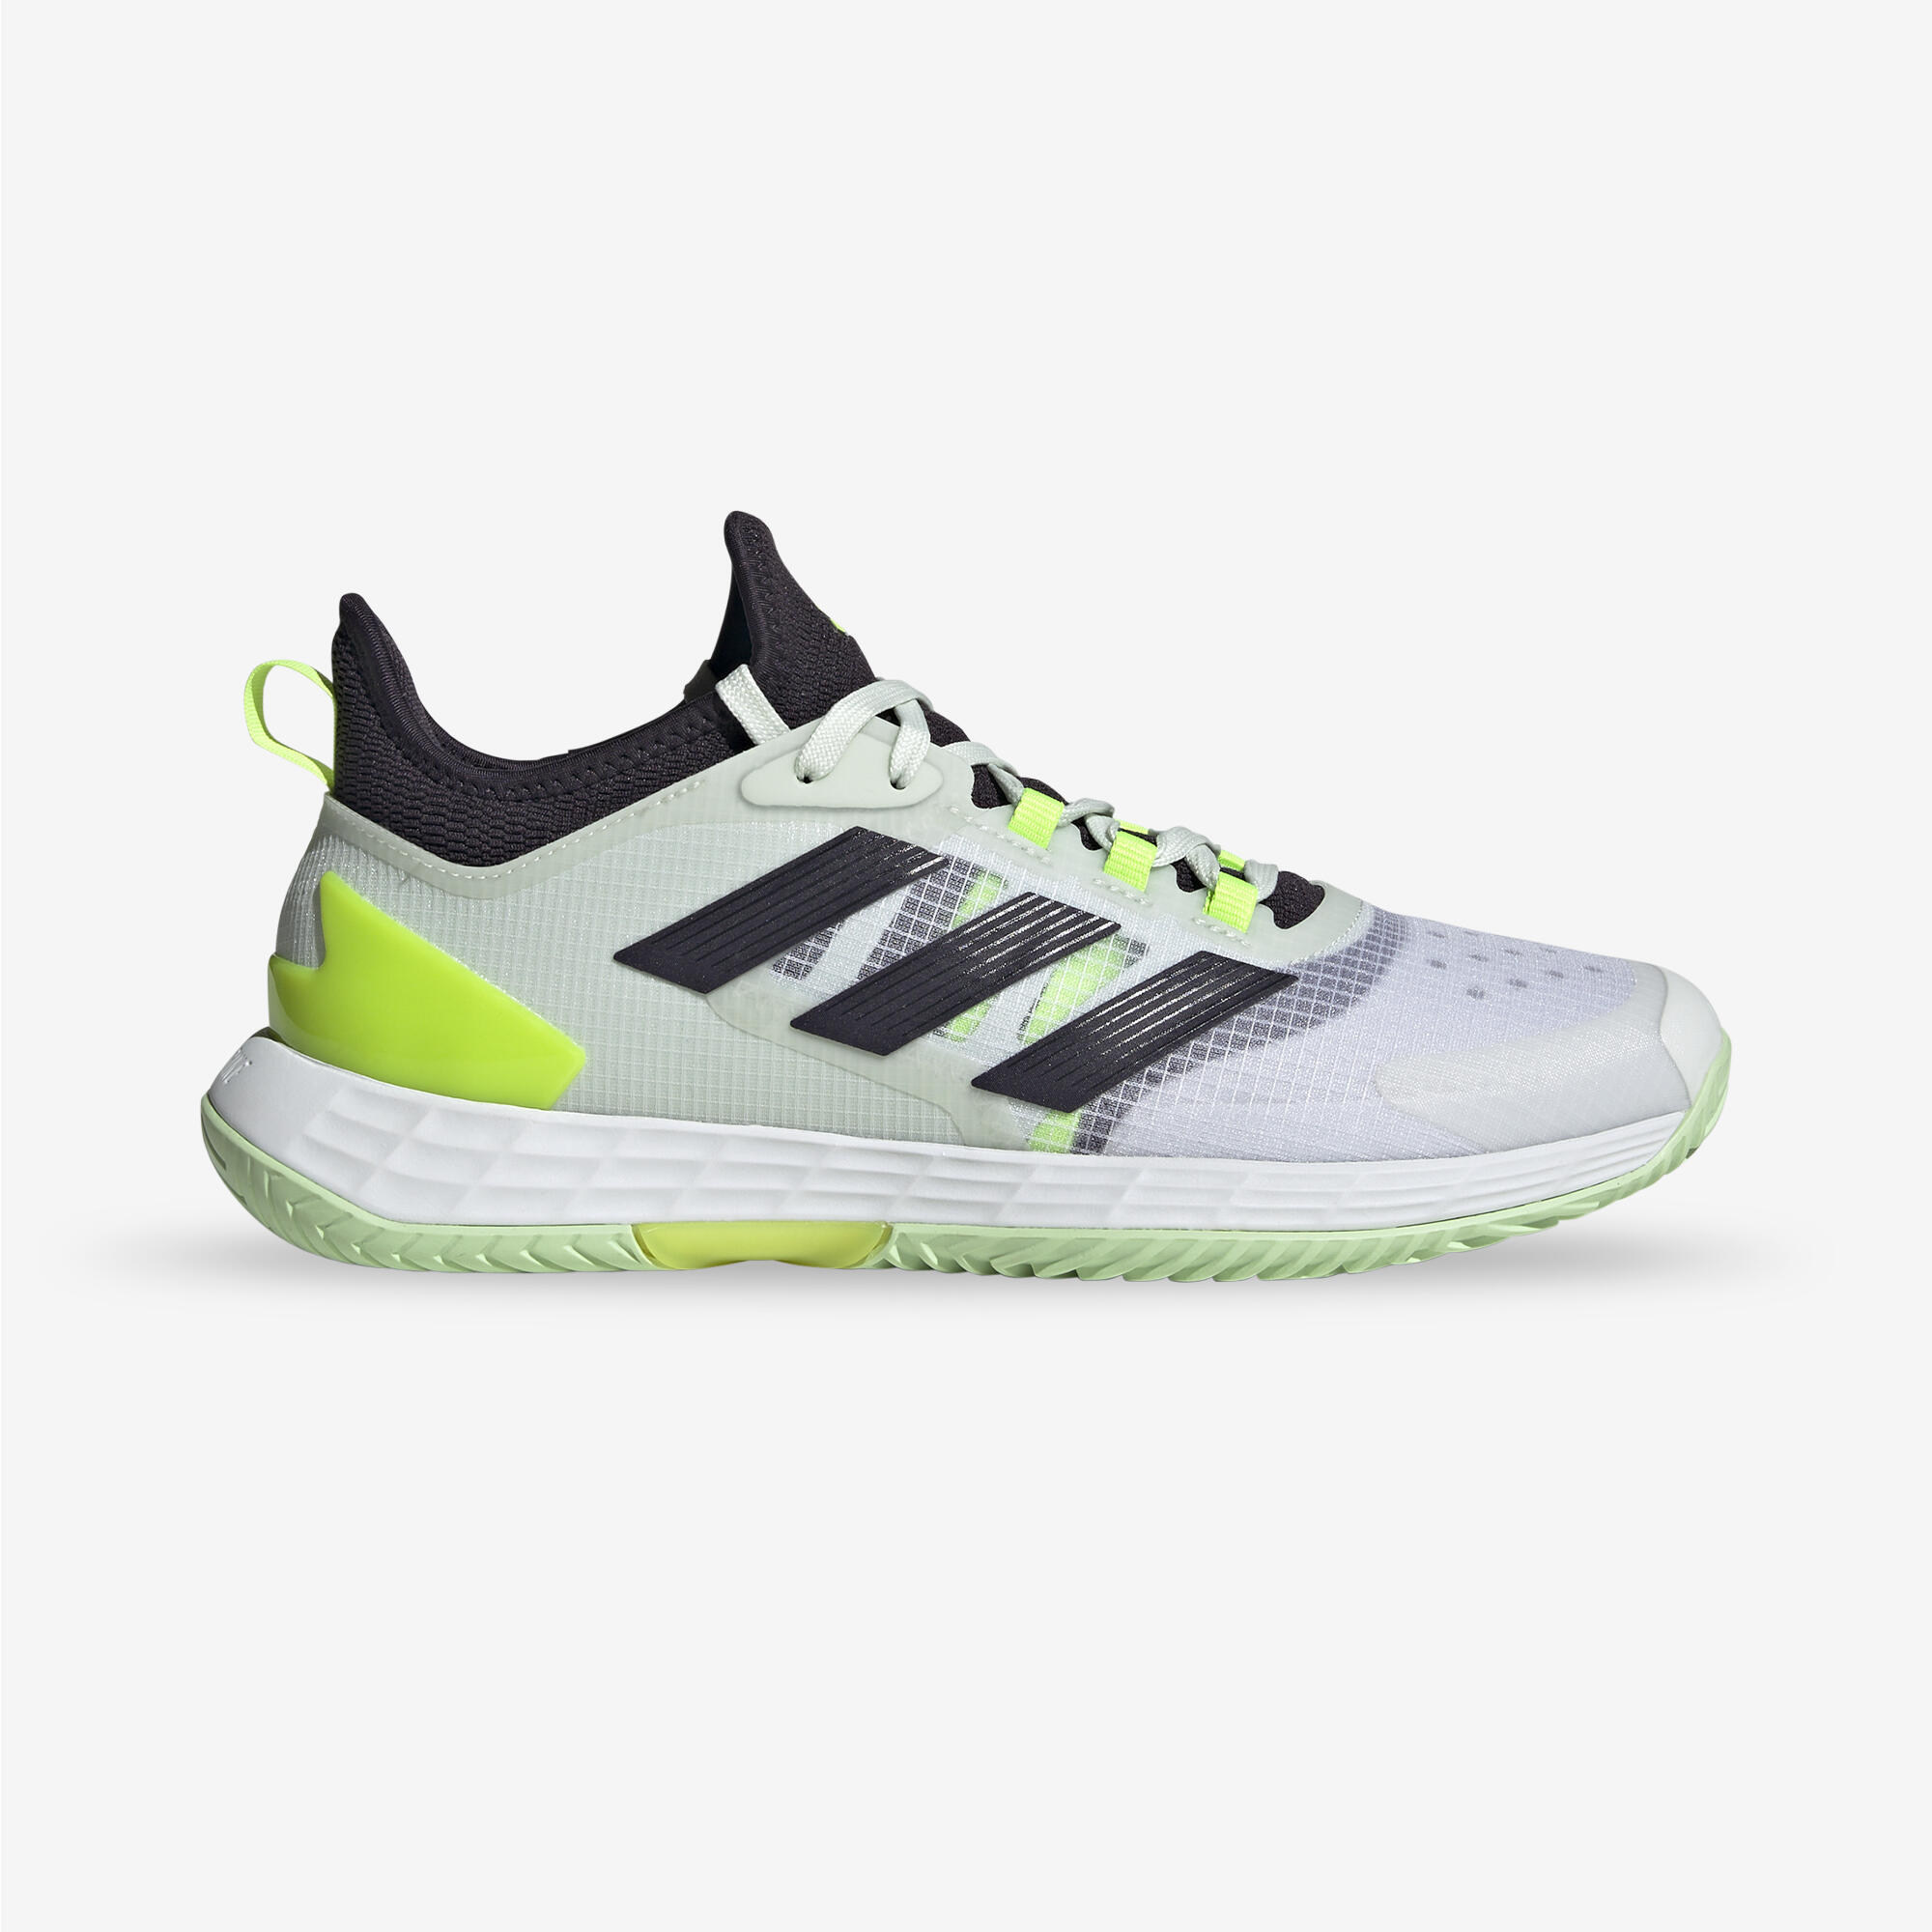 ADIDAS Chaussures De Tennis Homme Multicourt - Adidas Adizero Ubersonic 4.1 Lucid Lemon